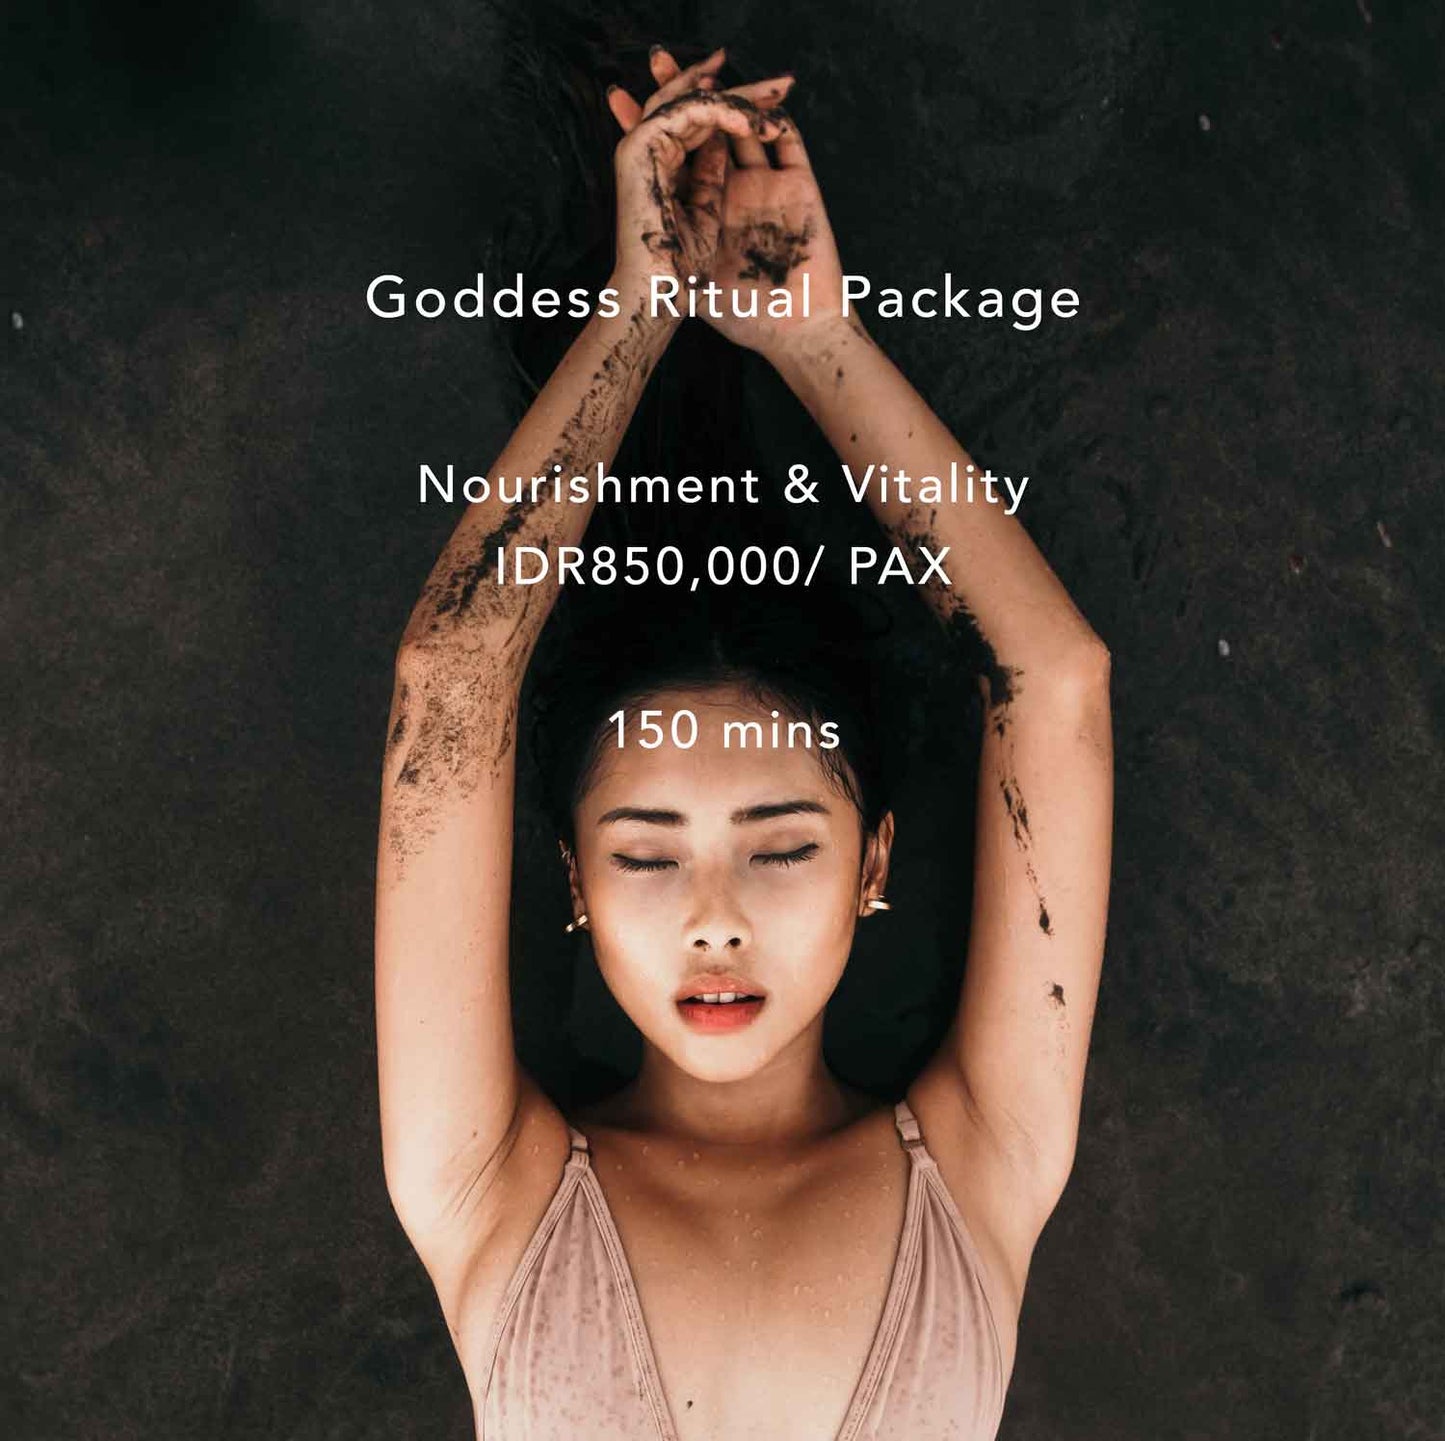 Goddess Ritual Package